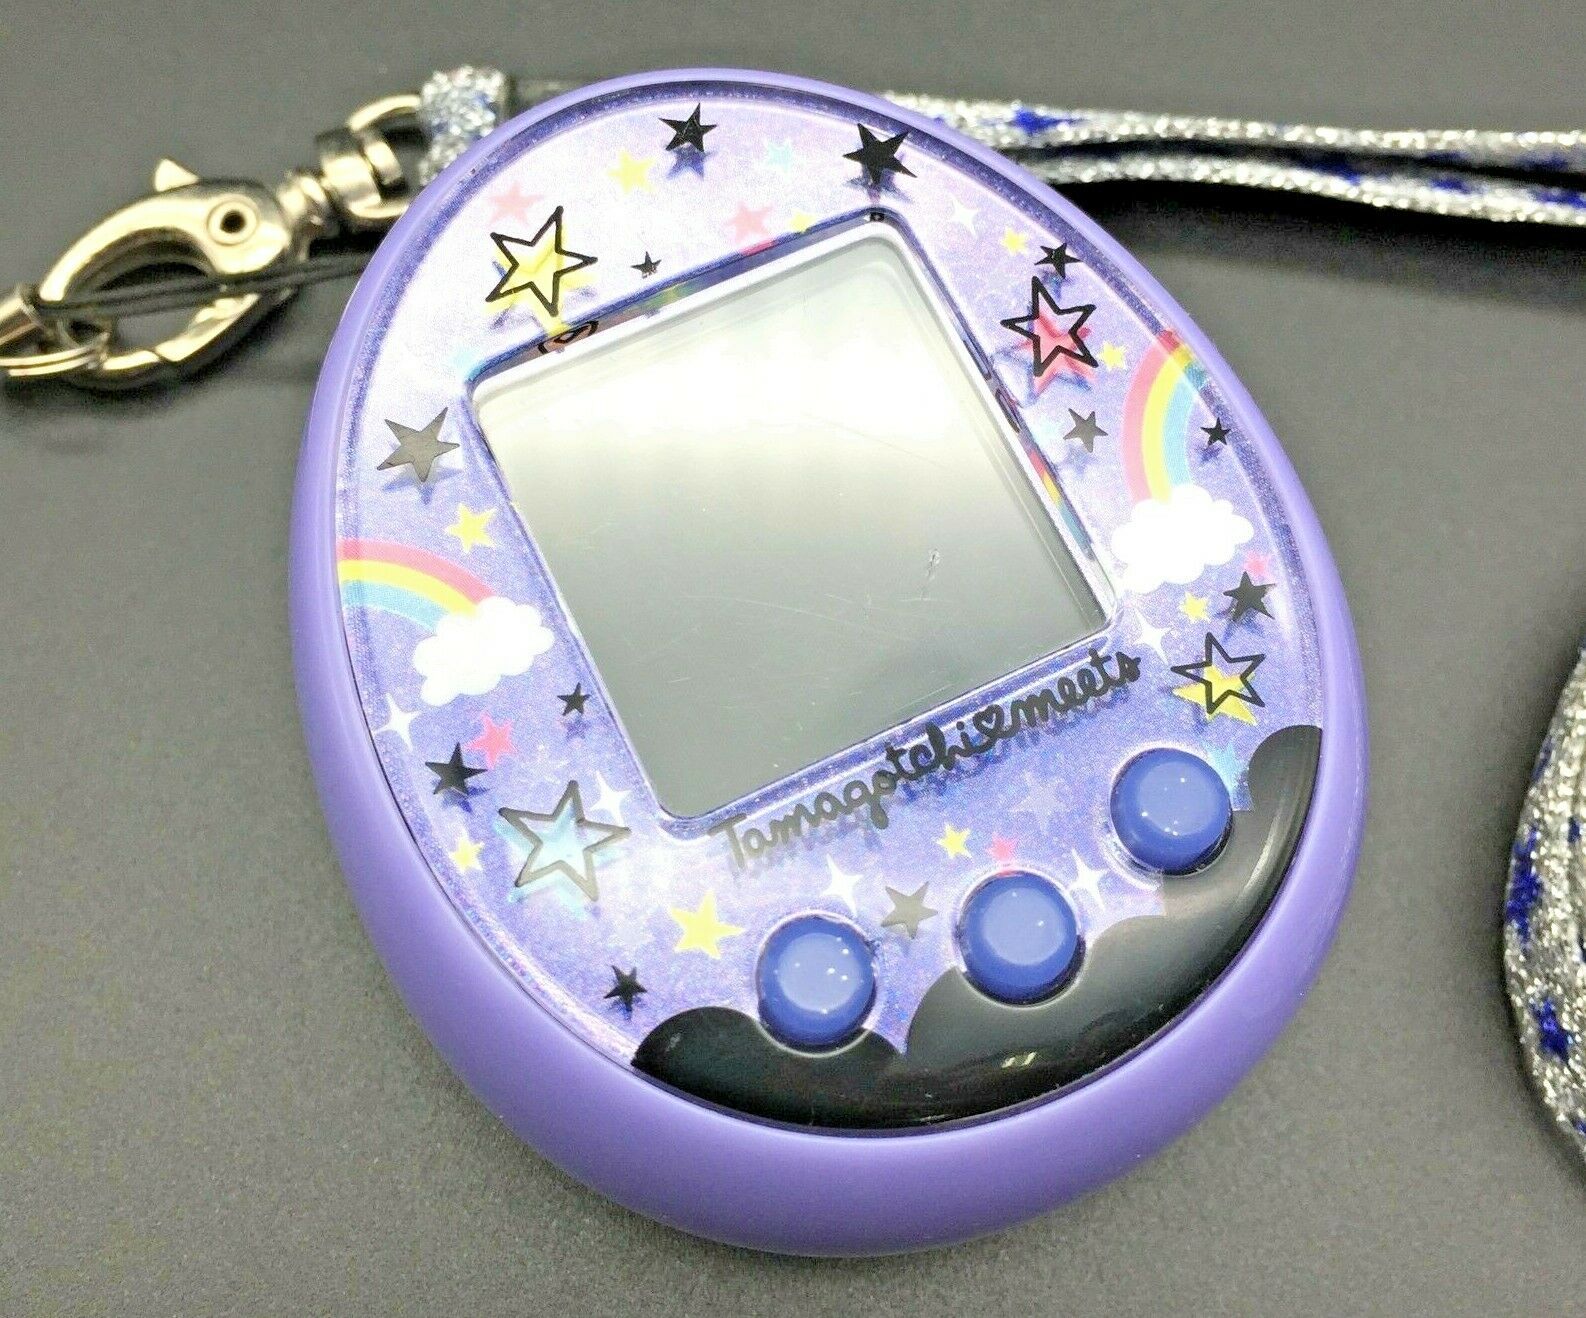 BANDAI Tamagotchi meets Magical Meets Ver. purple With strap Japan Pet Game DHL